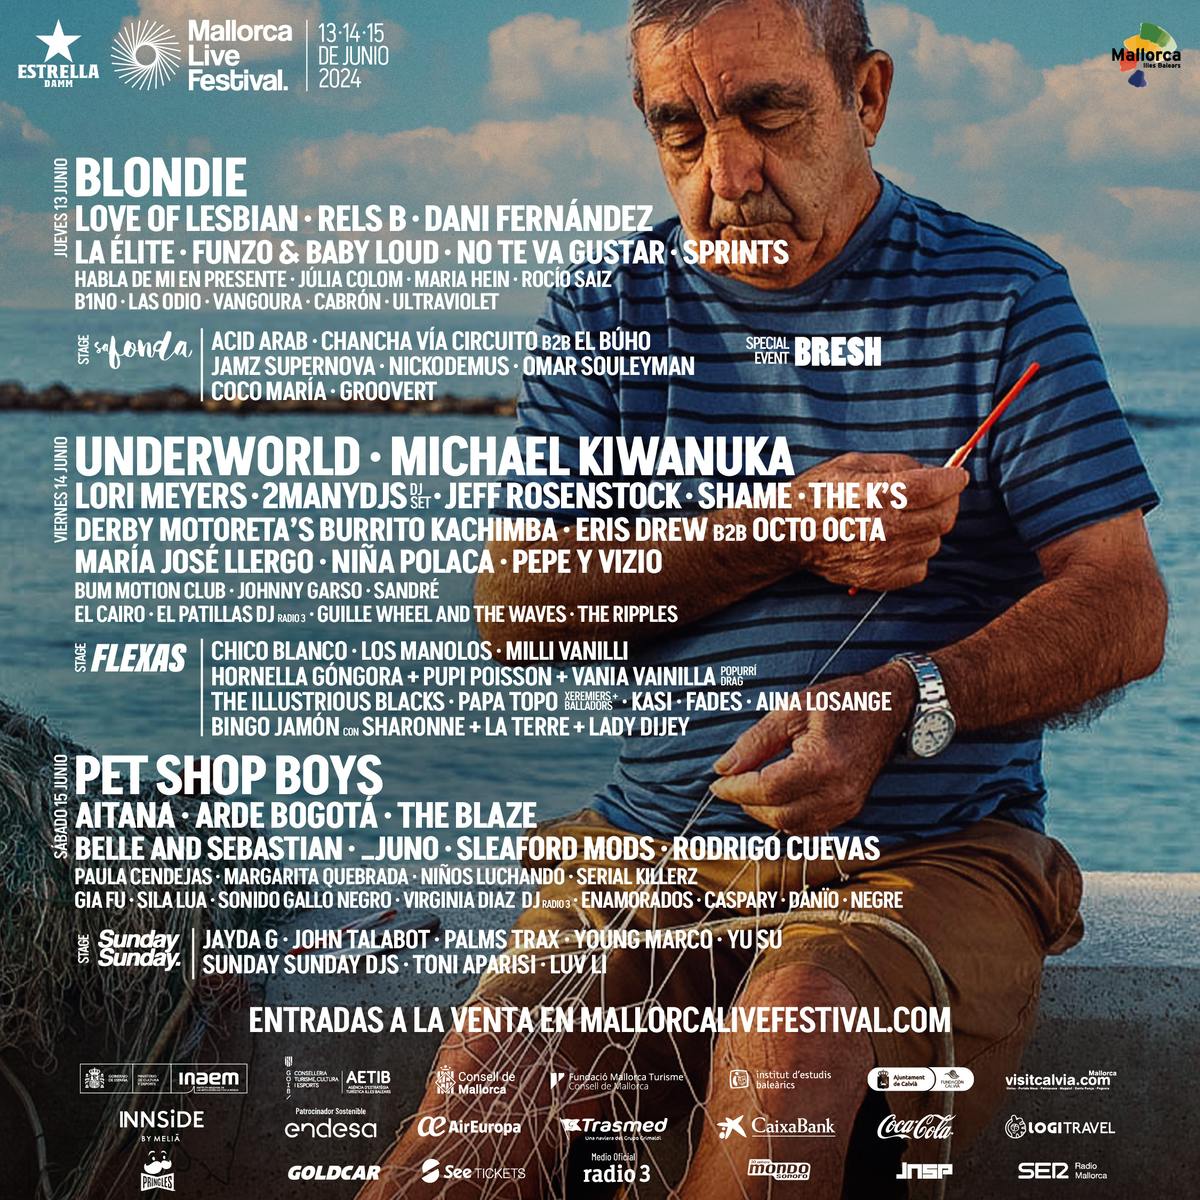 Bilet 2-dniowy (czwartek+piątek) Mallorca Live Festival 2024